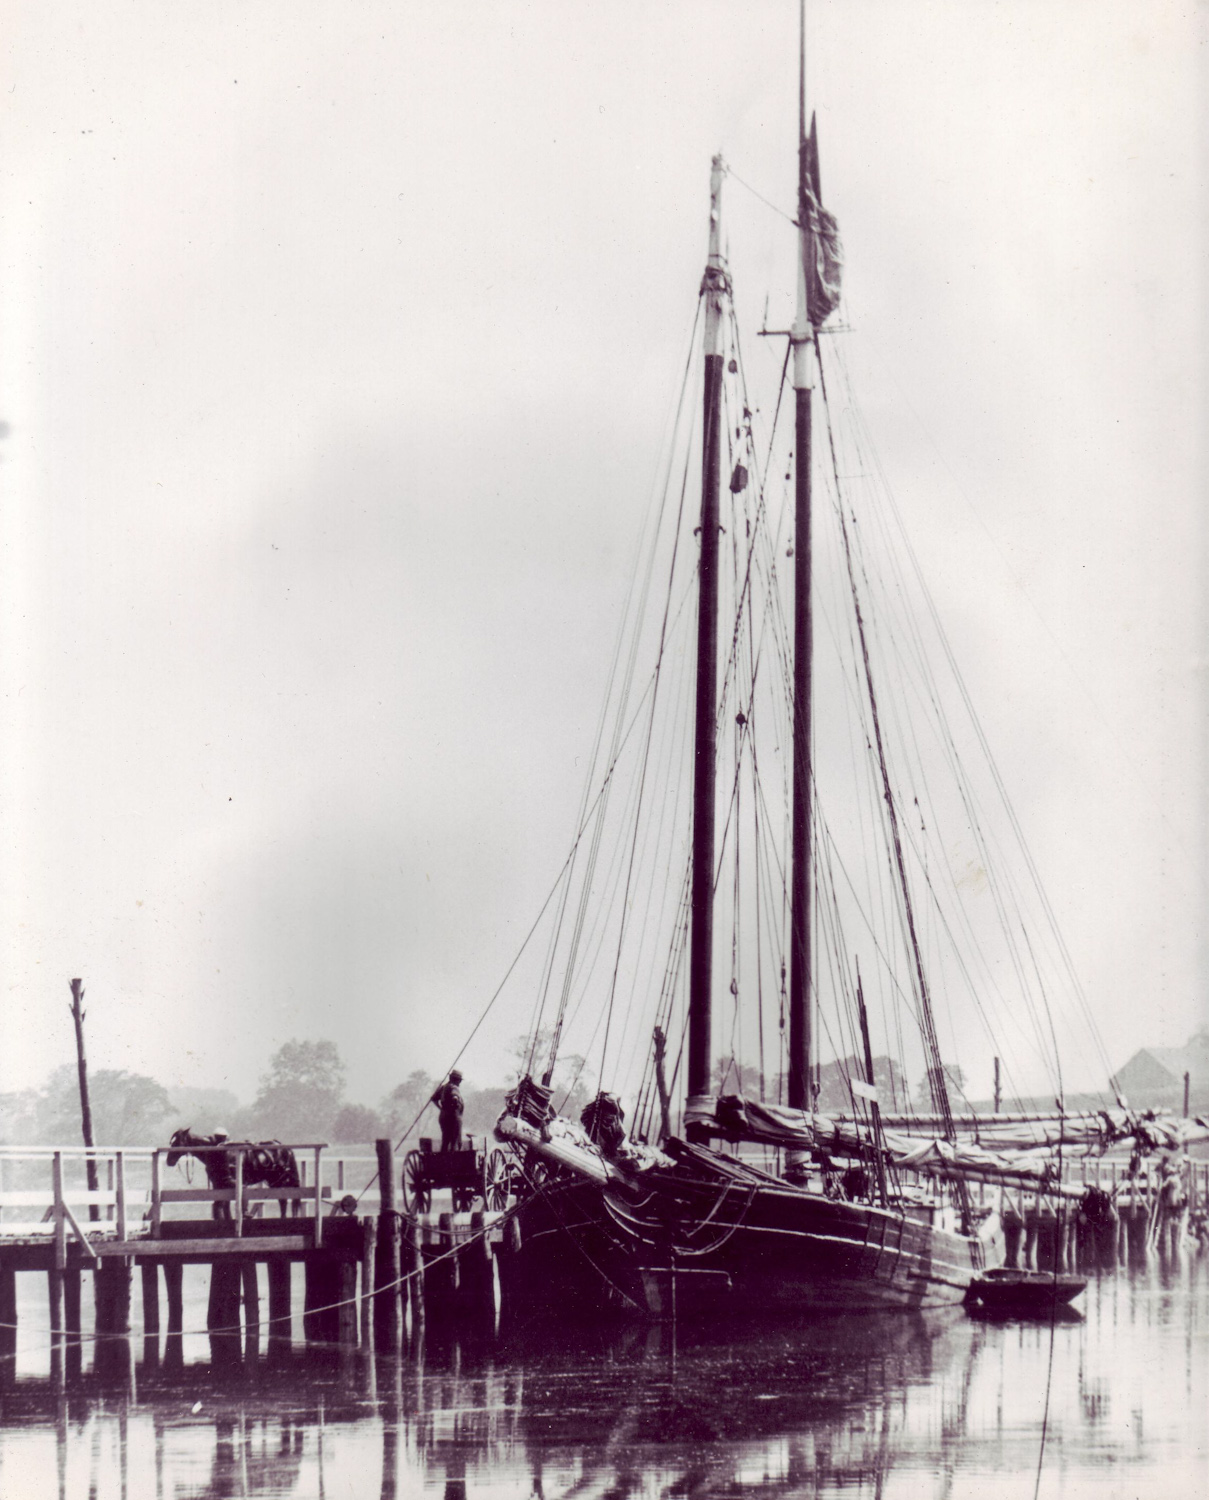 Loading coal, Strong's Bridge, Long Island, New York, 1880